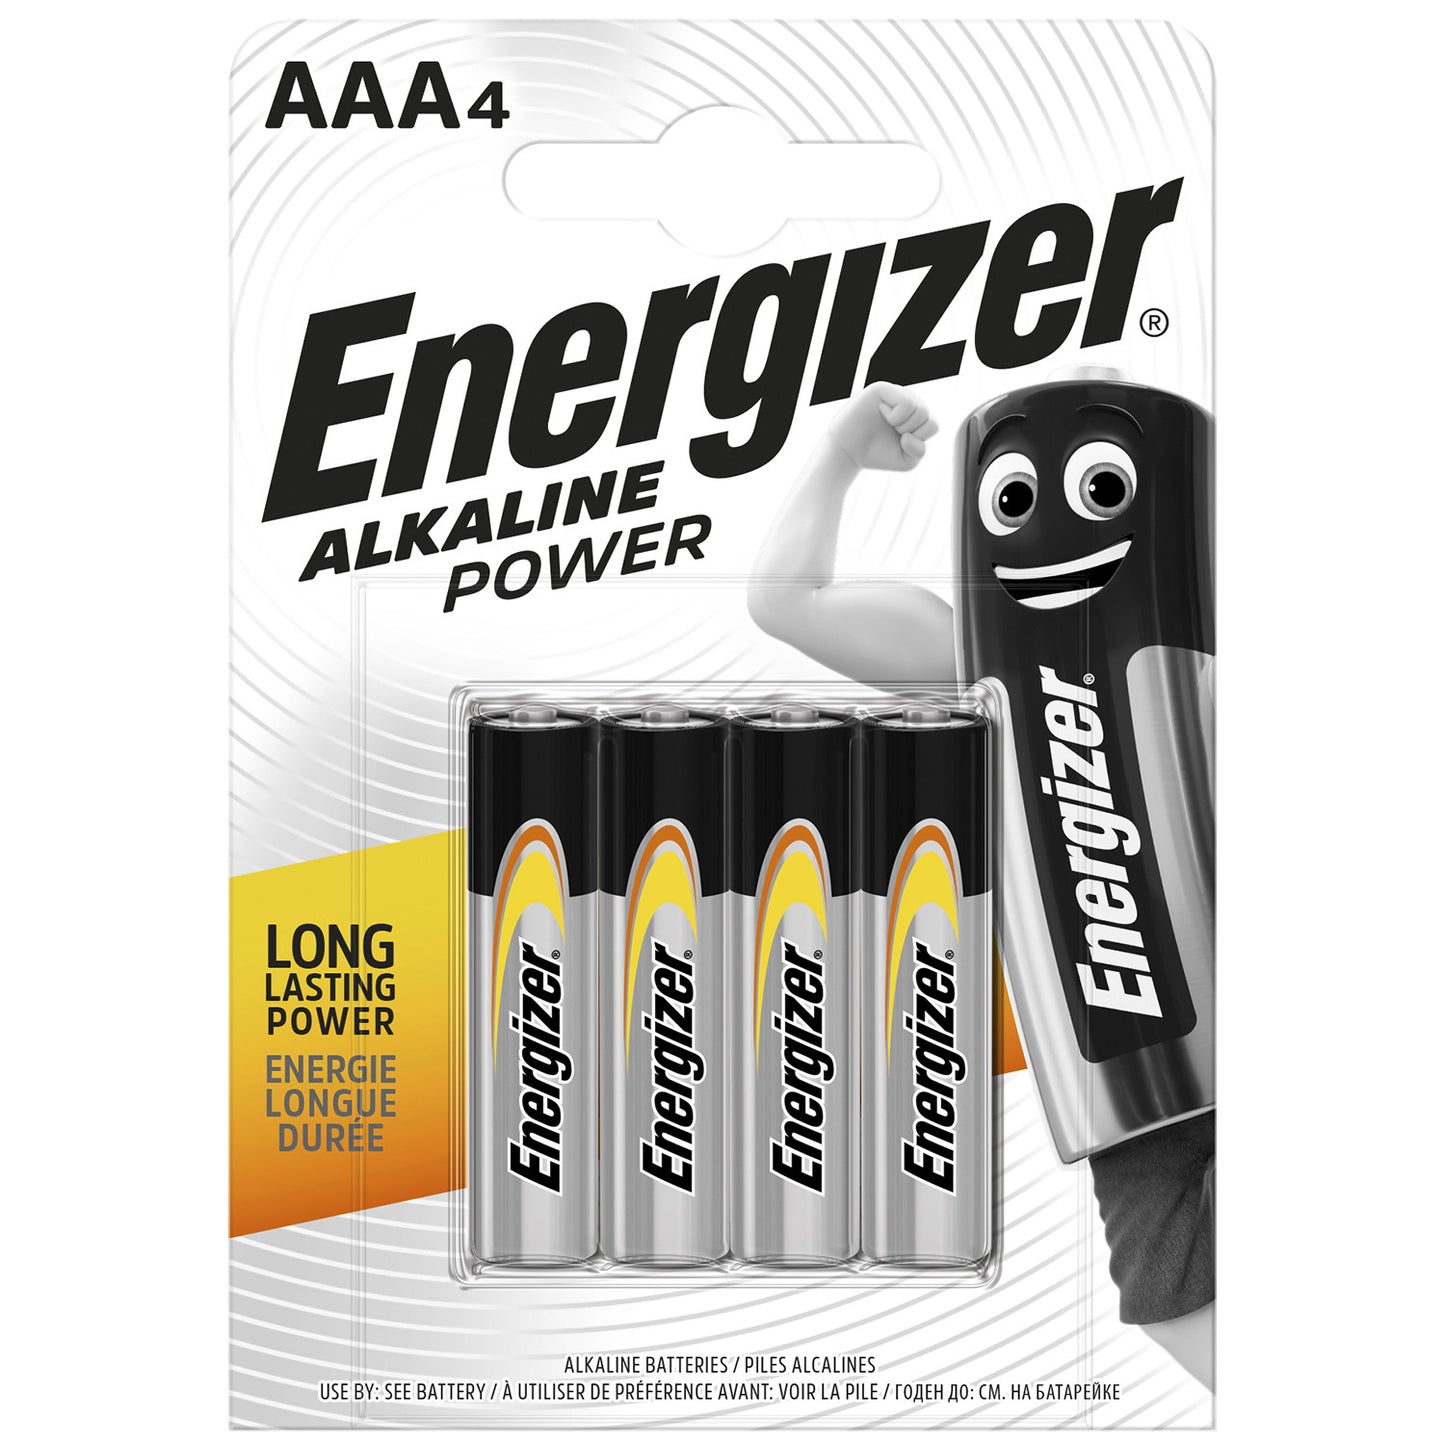 ENERGIZER® ALKALINE POWER – AAA4